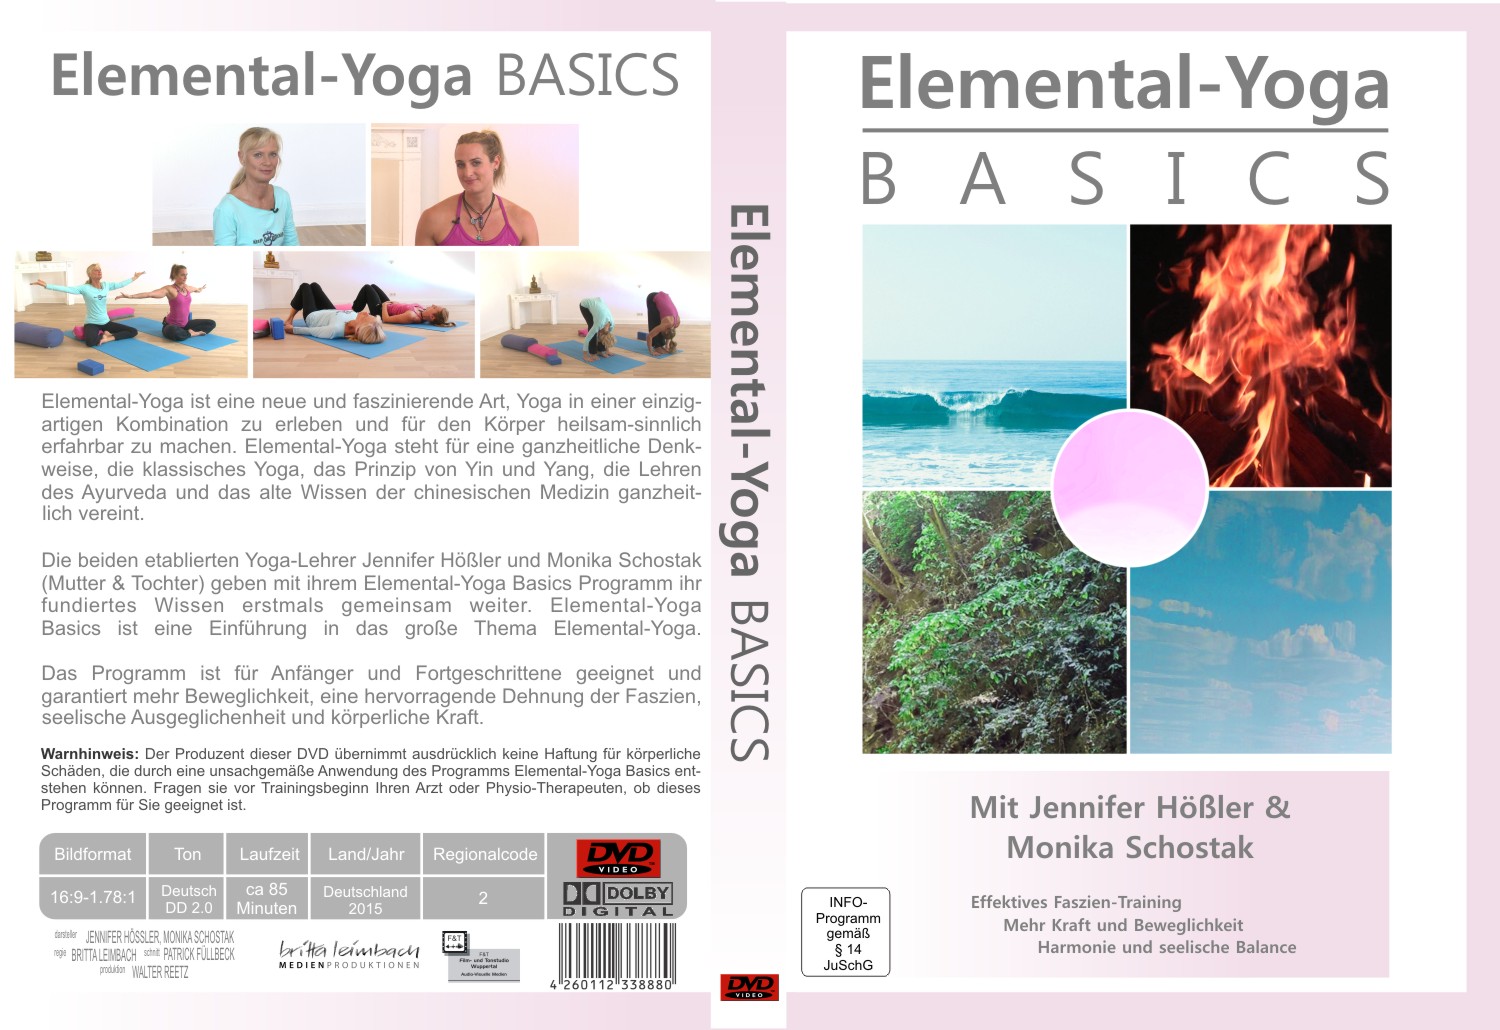 Elemental-Yoga Basics